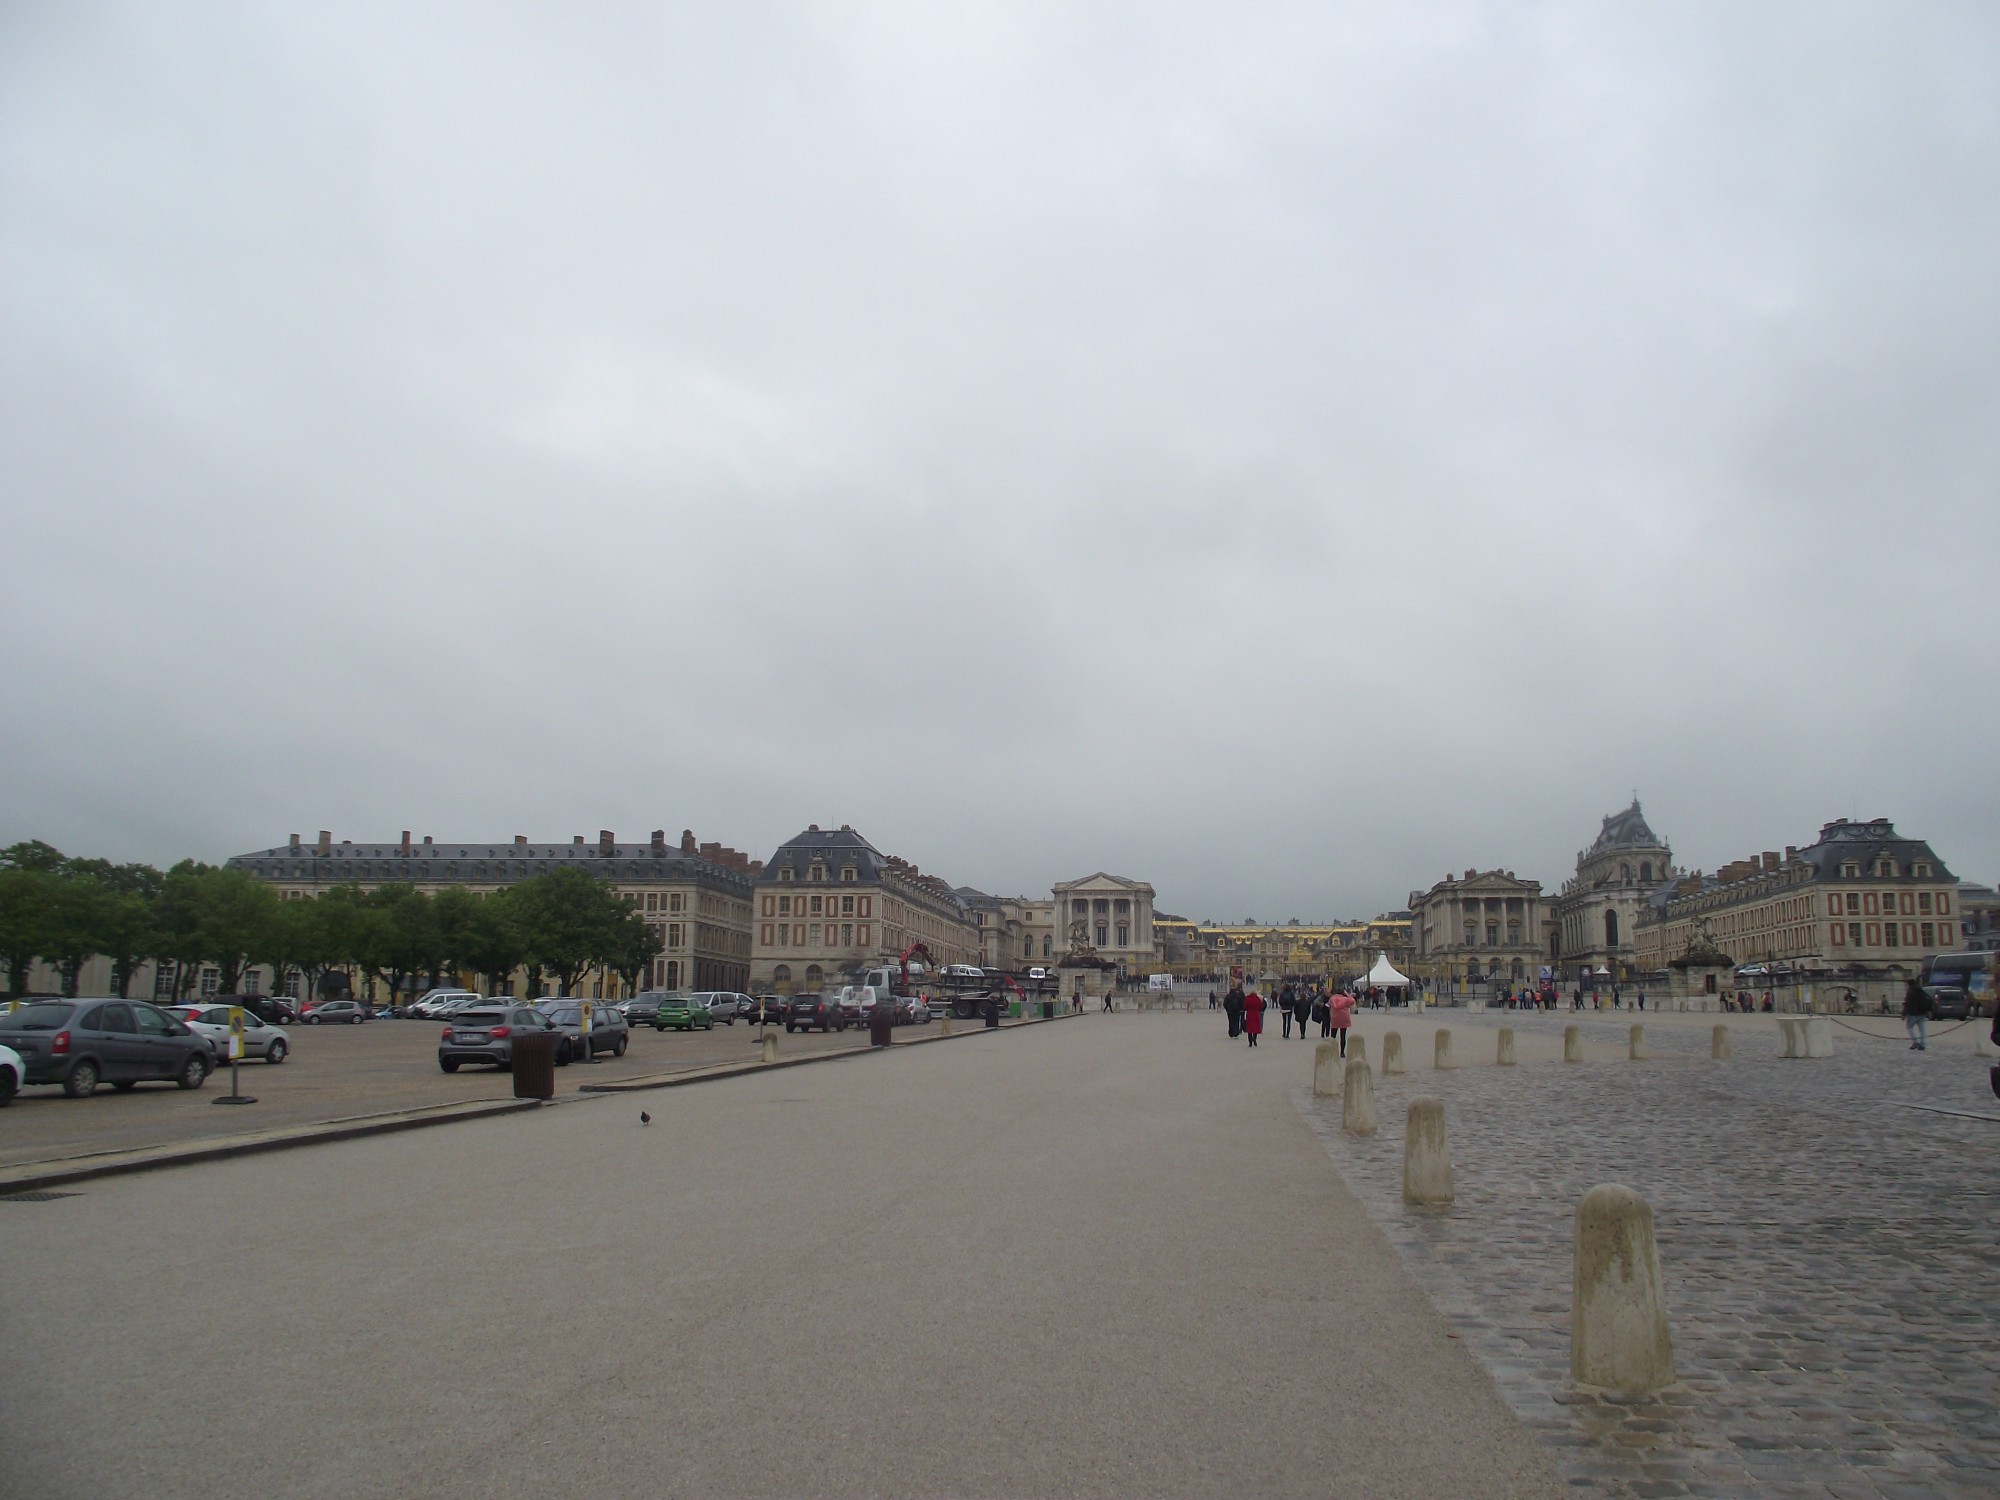 Площадь перед Версальским дворцом. (28.04.2017)